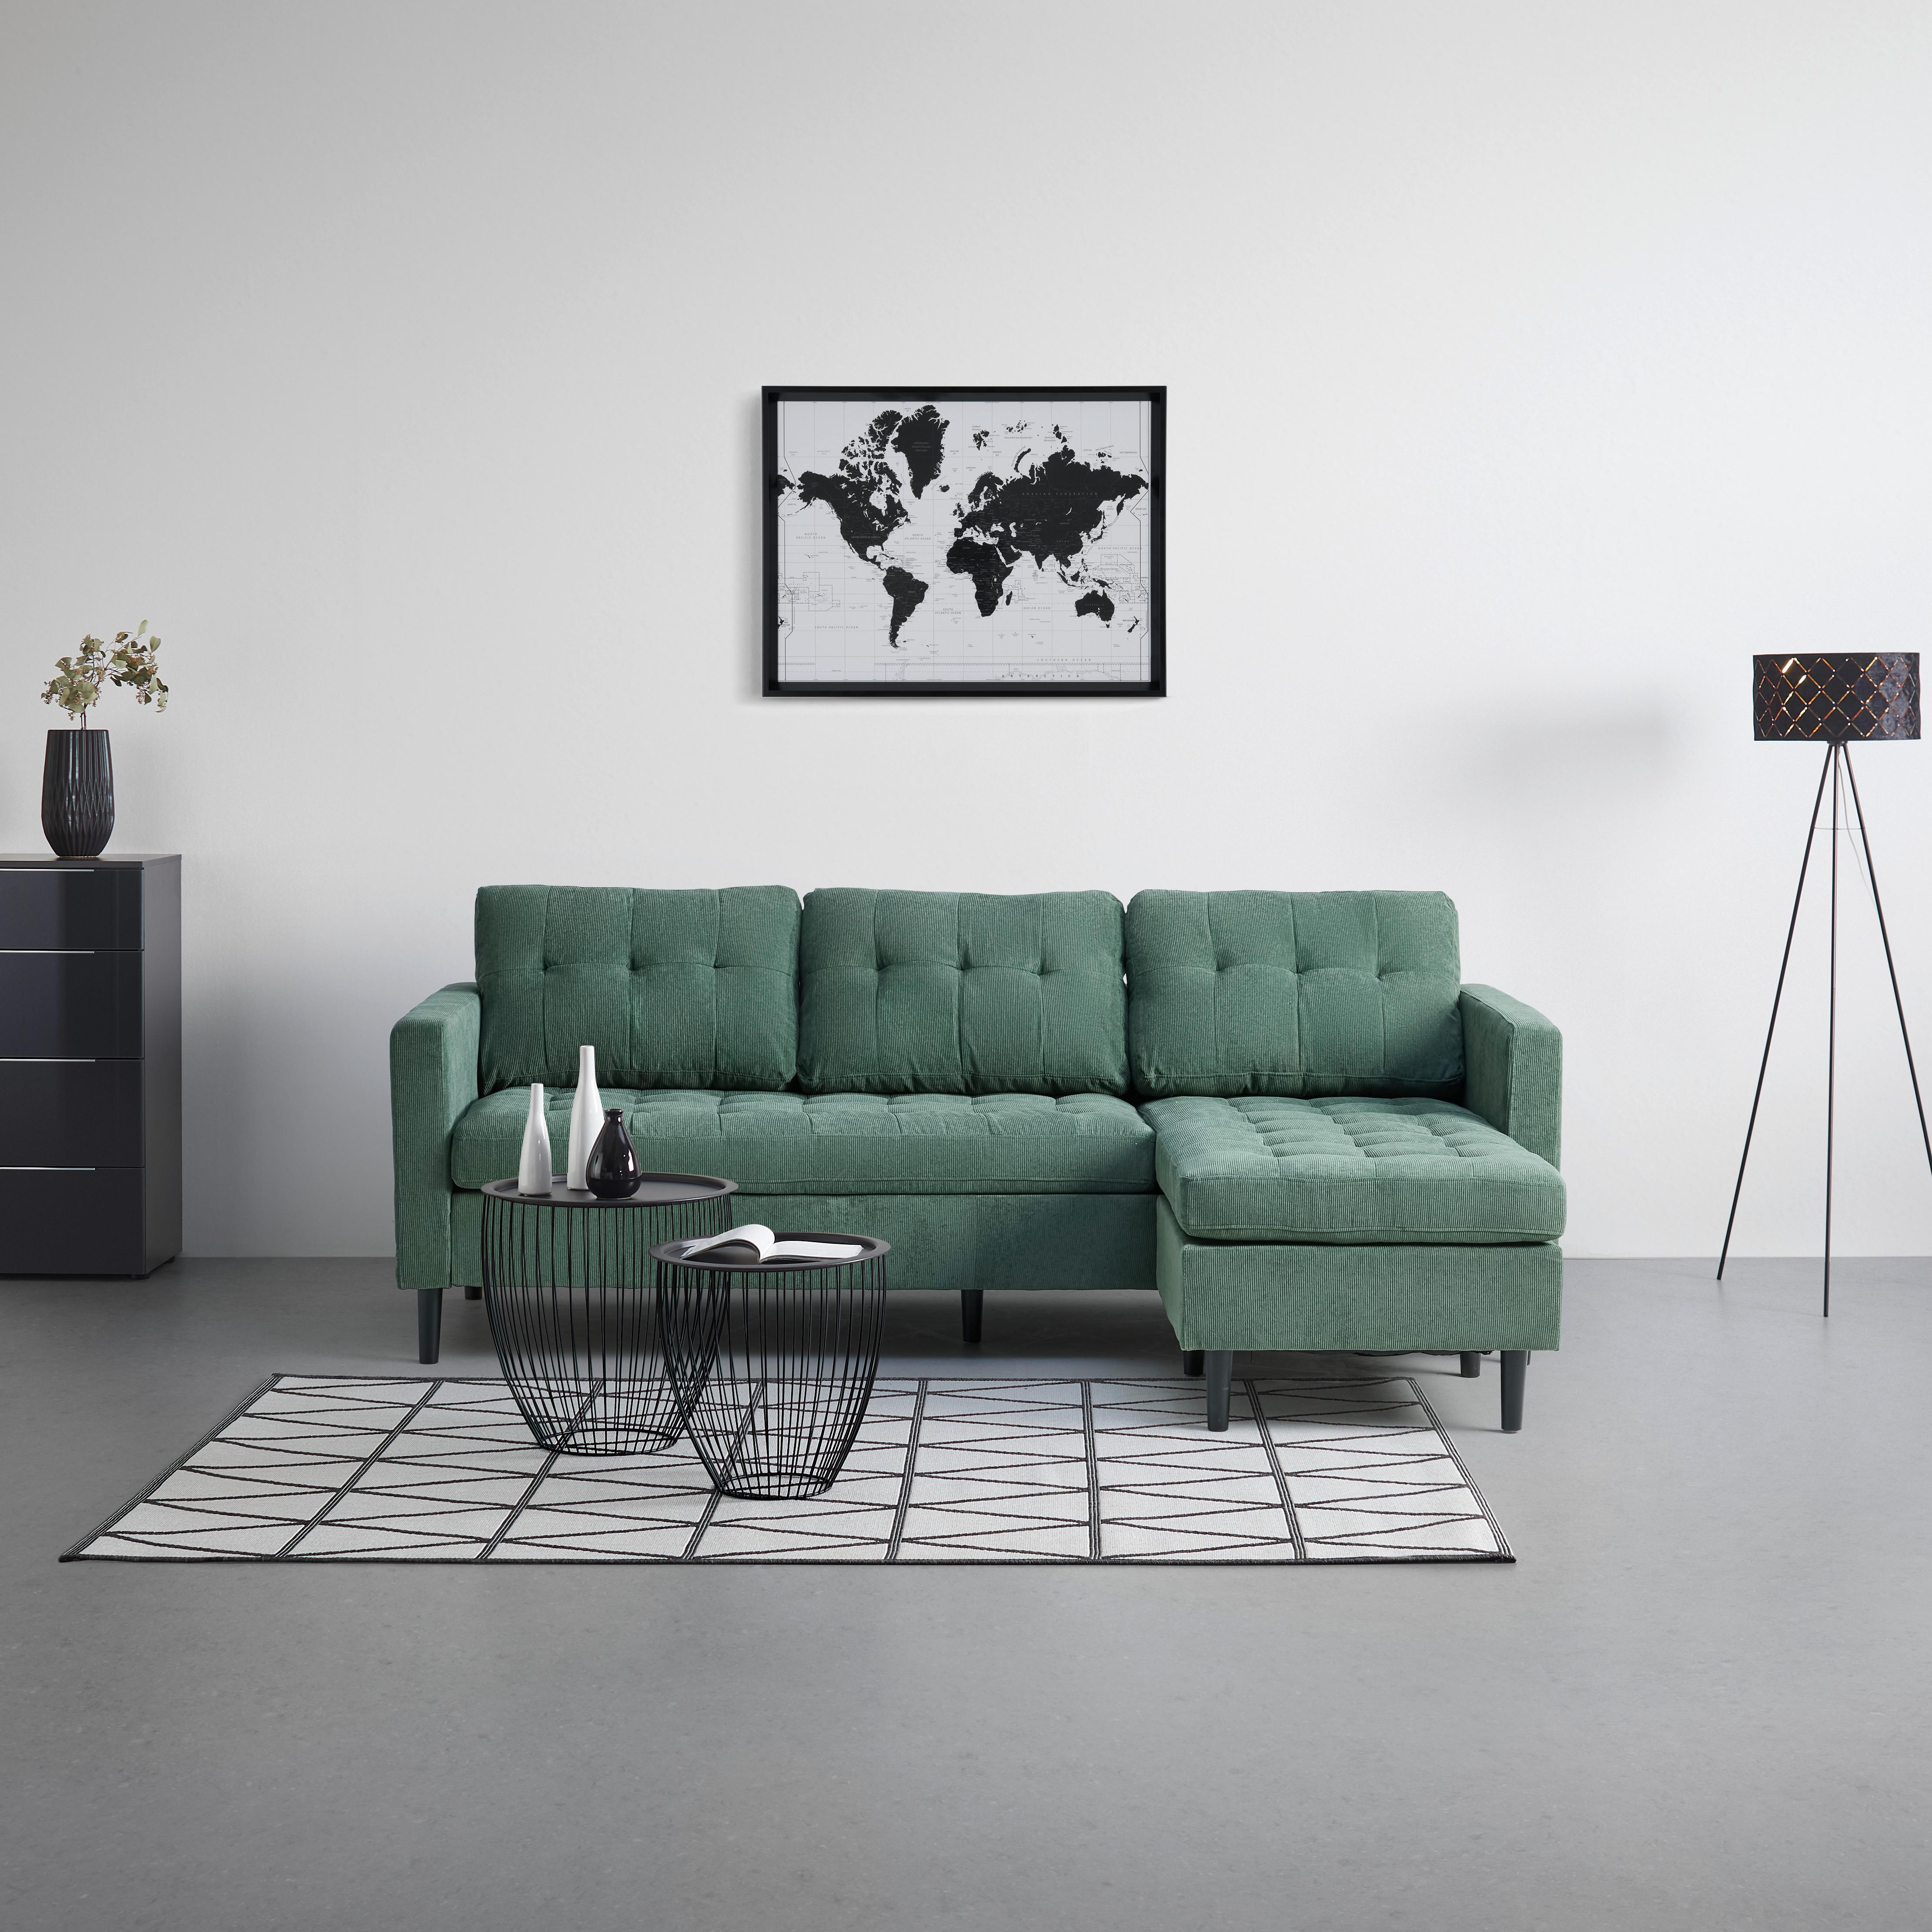 Sjedeća Garnitura Lillehammer - zelena/crna, Modern, tekstil/drvo (217/80/149cm) - Based